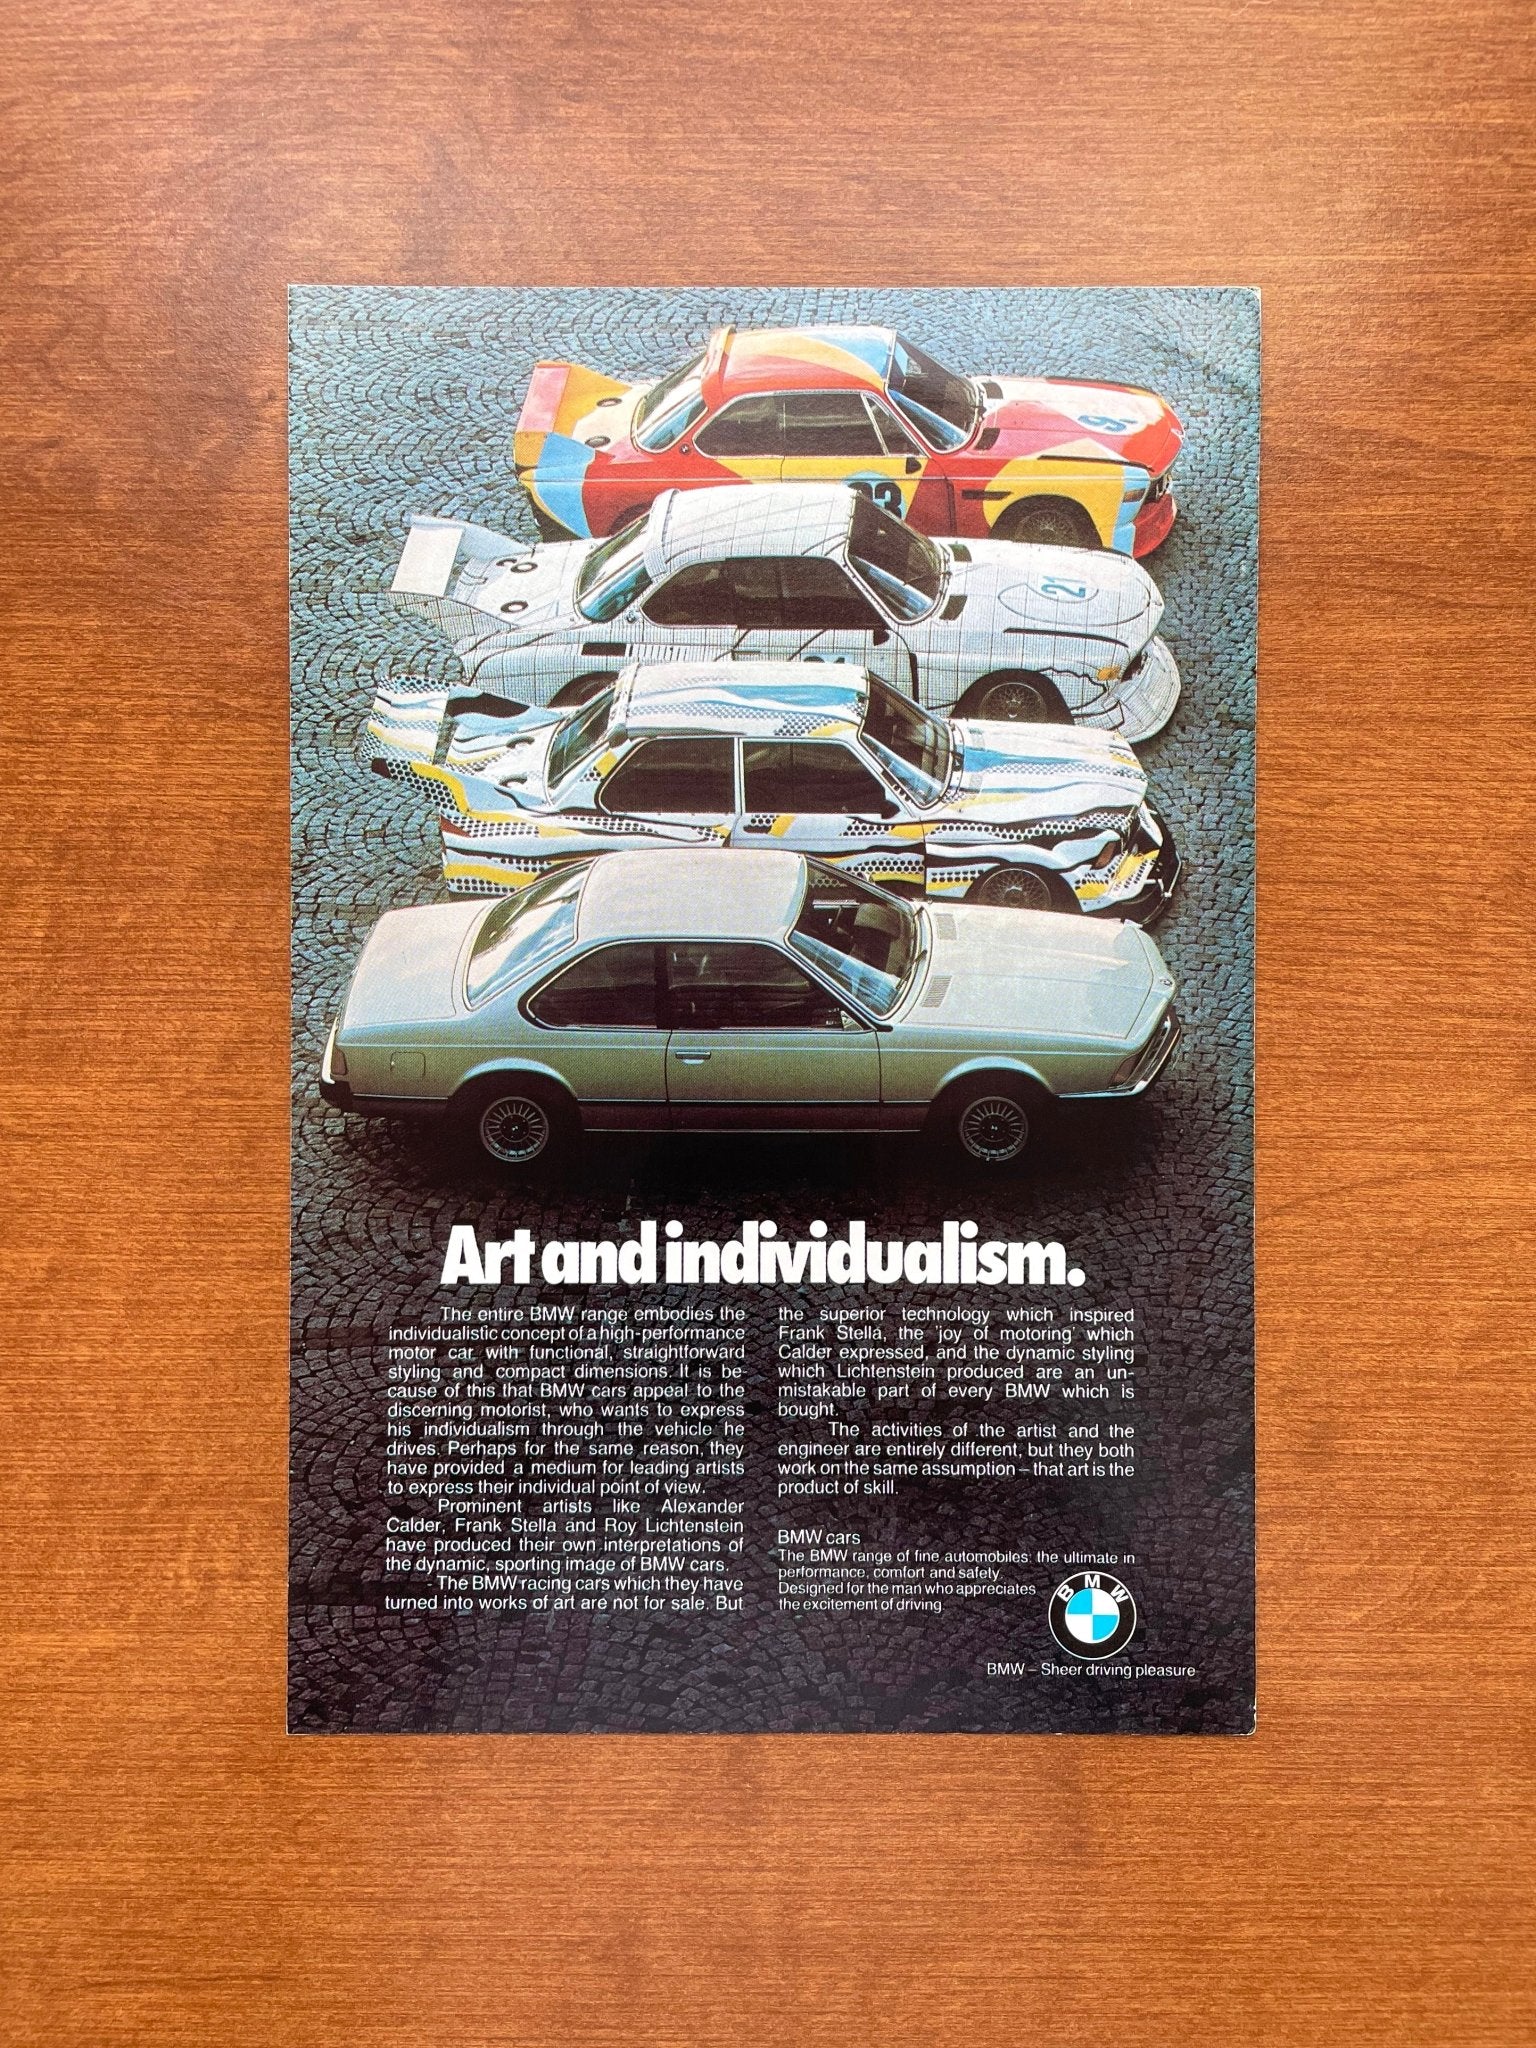 1978 BMW "Art and individualism." Advertisement